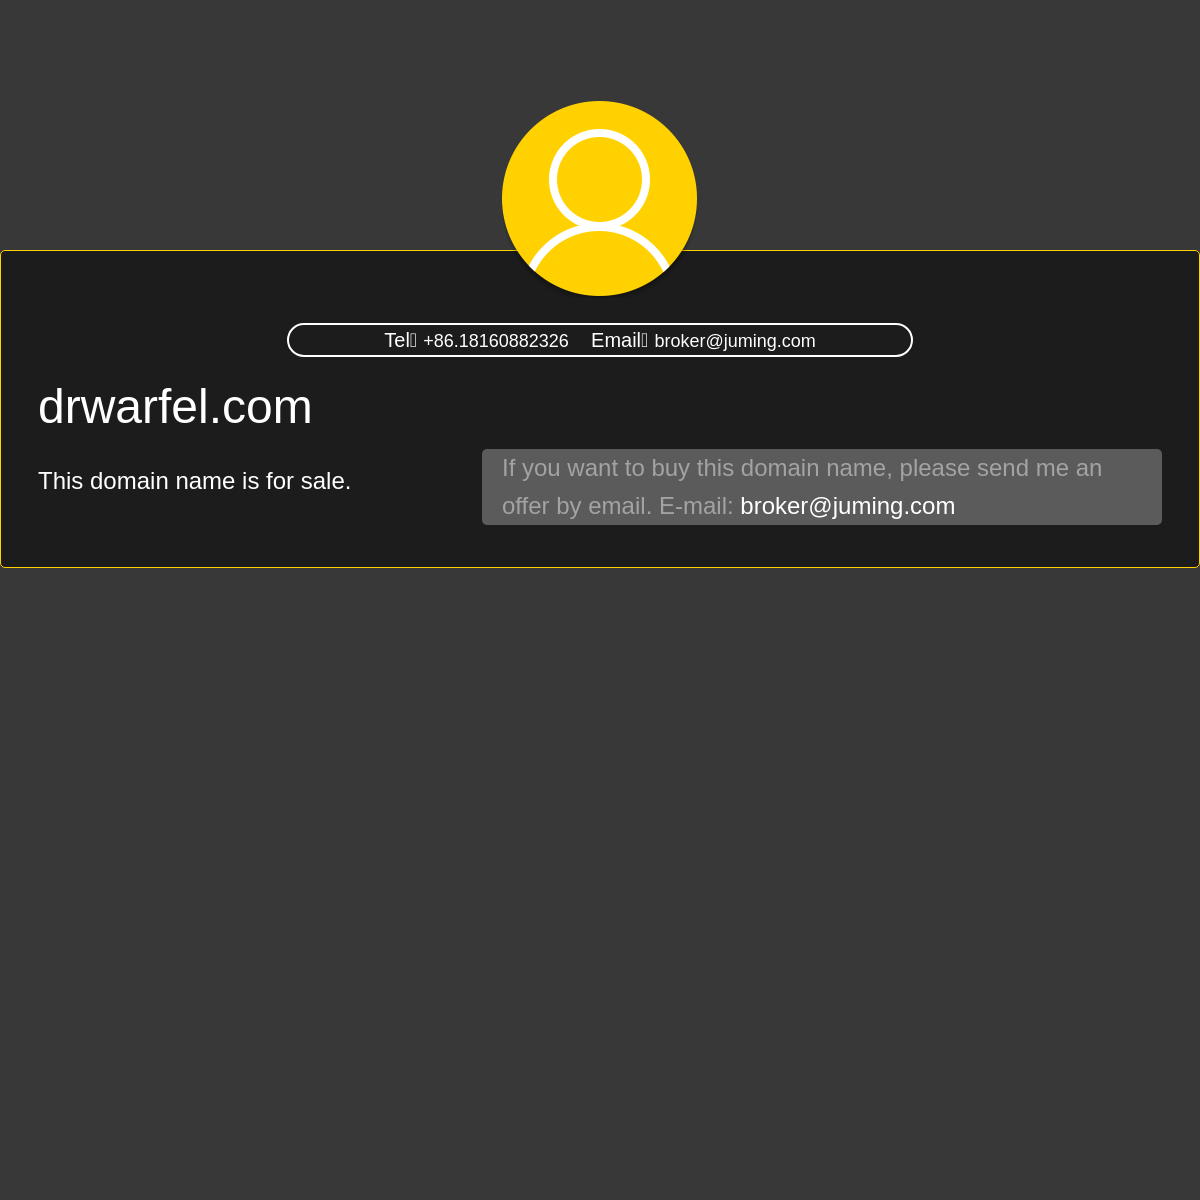 A complete backup of drwarfel.com